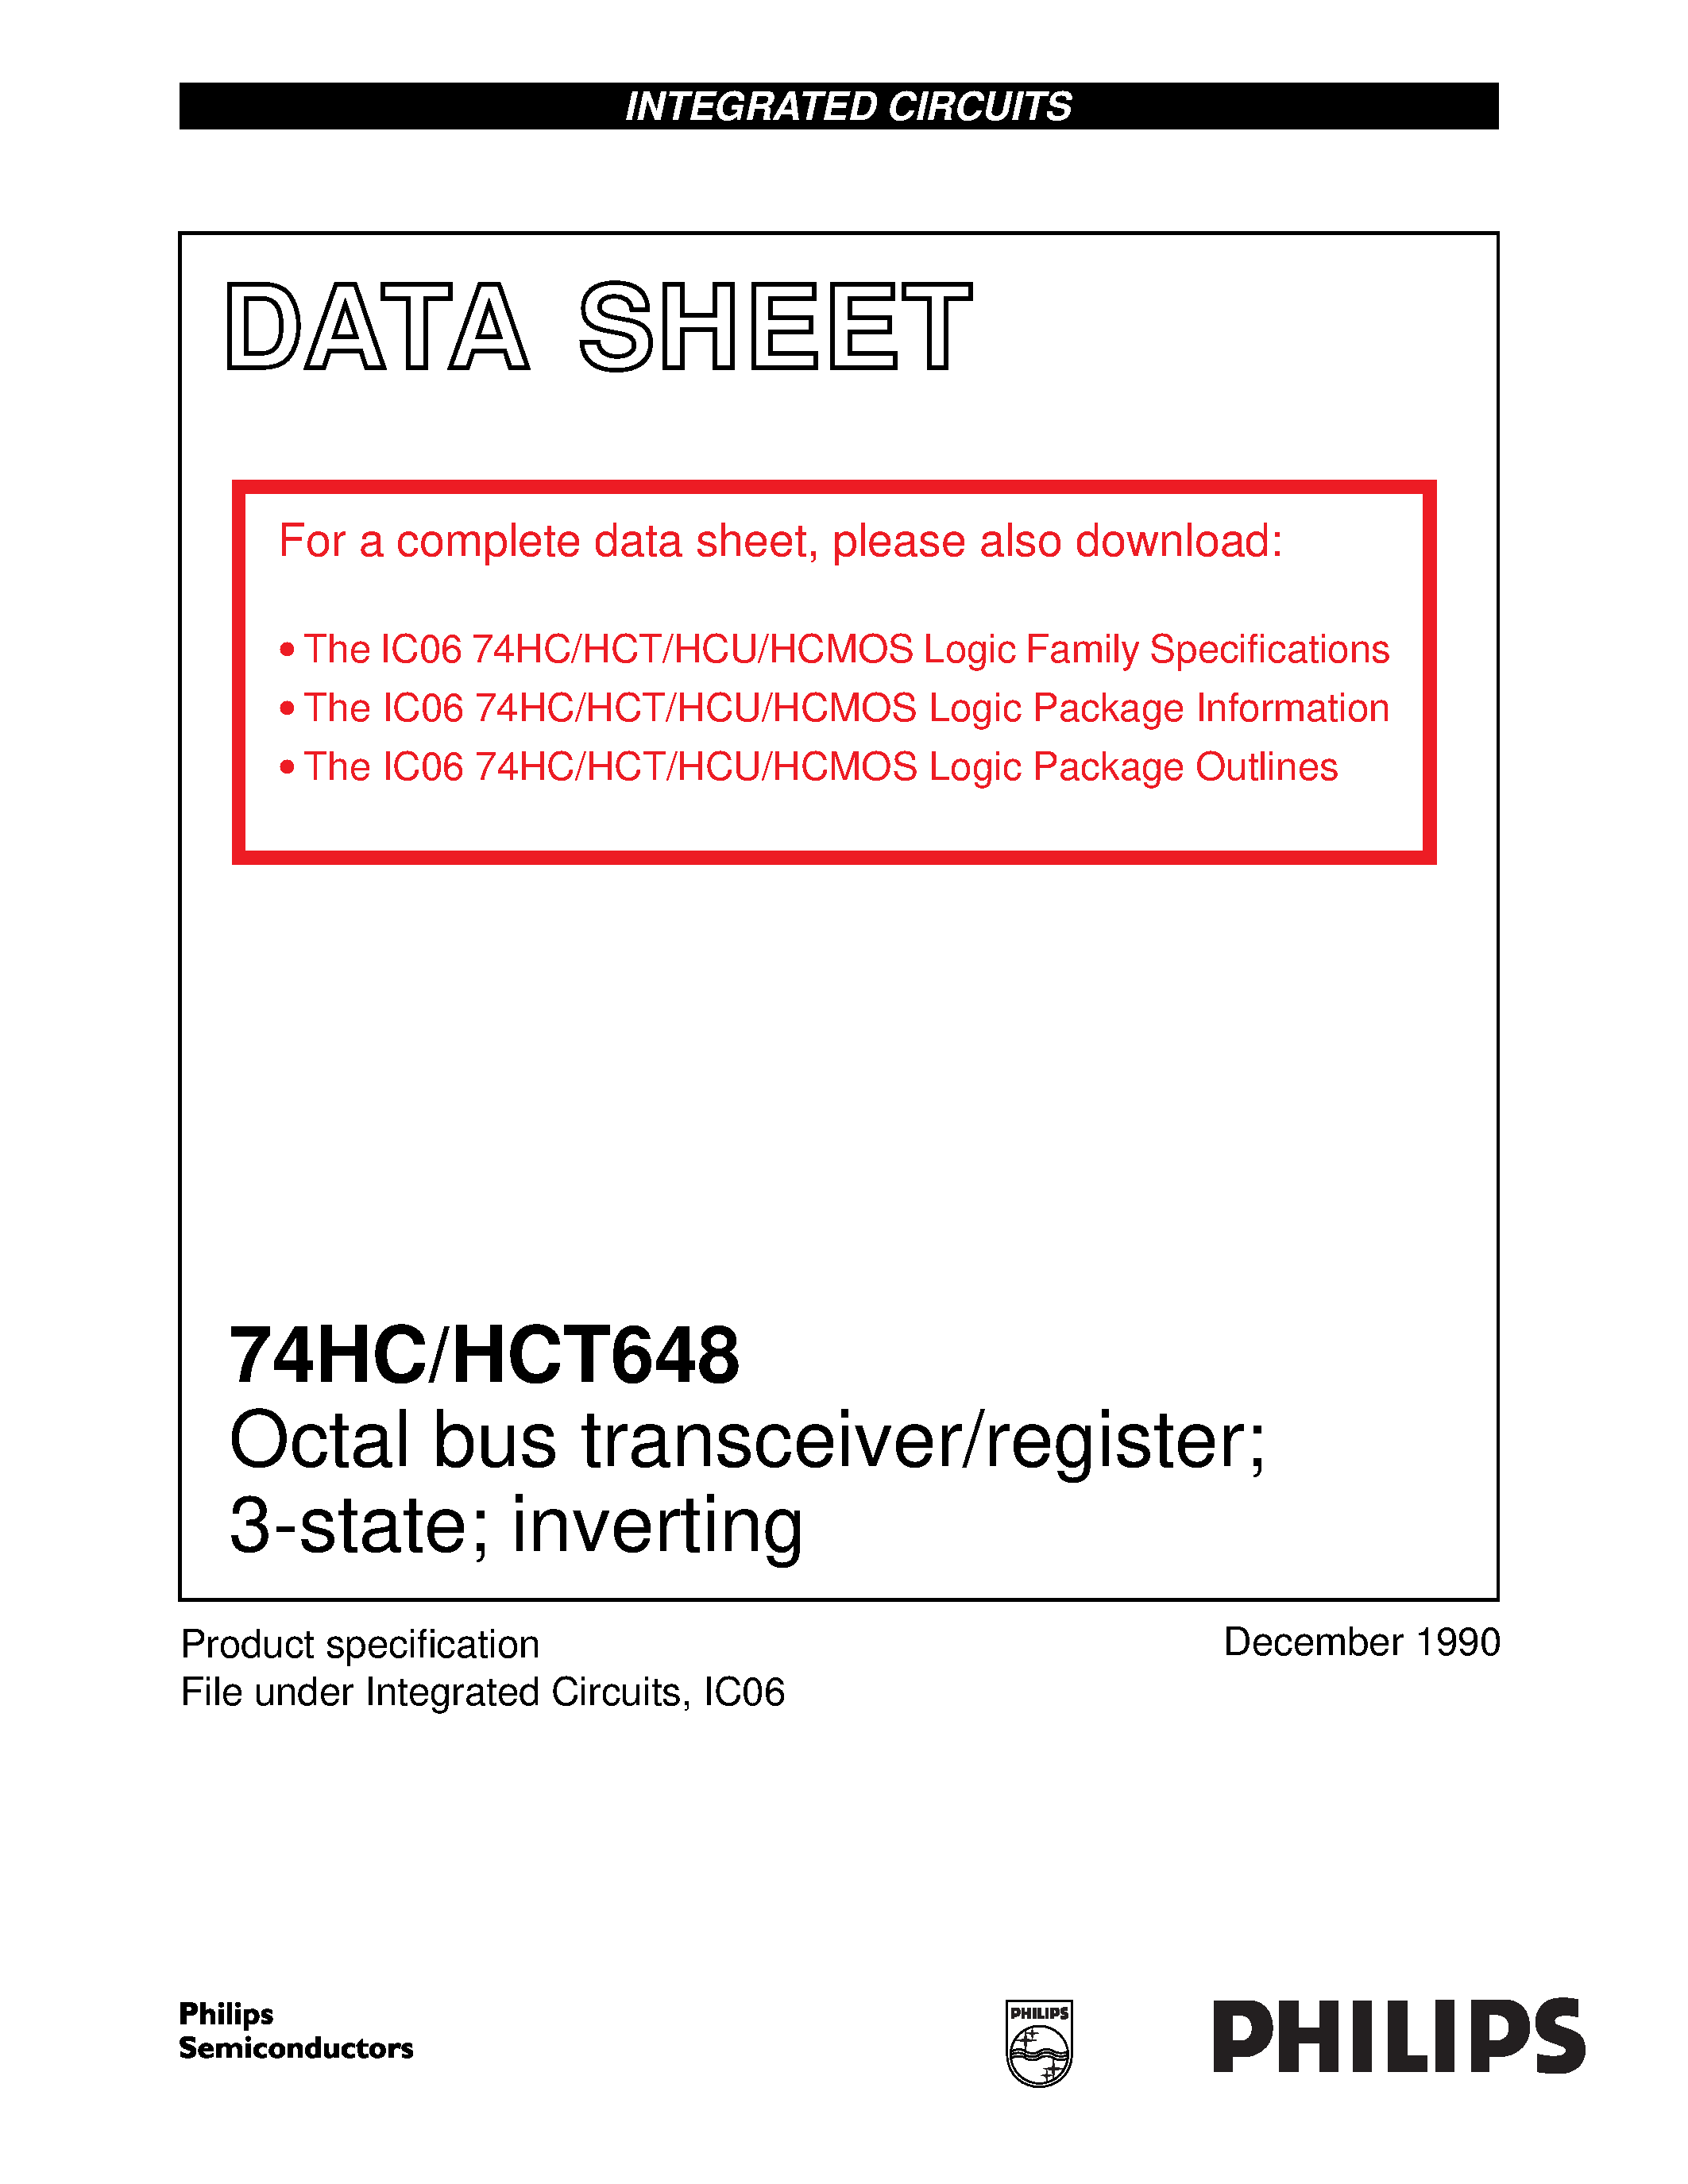 Даташит 74HCT648 - Octal bus transceiver/register; 3-state; inverting страница 1